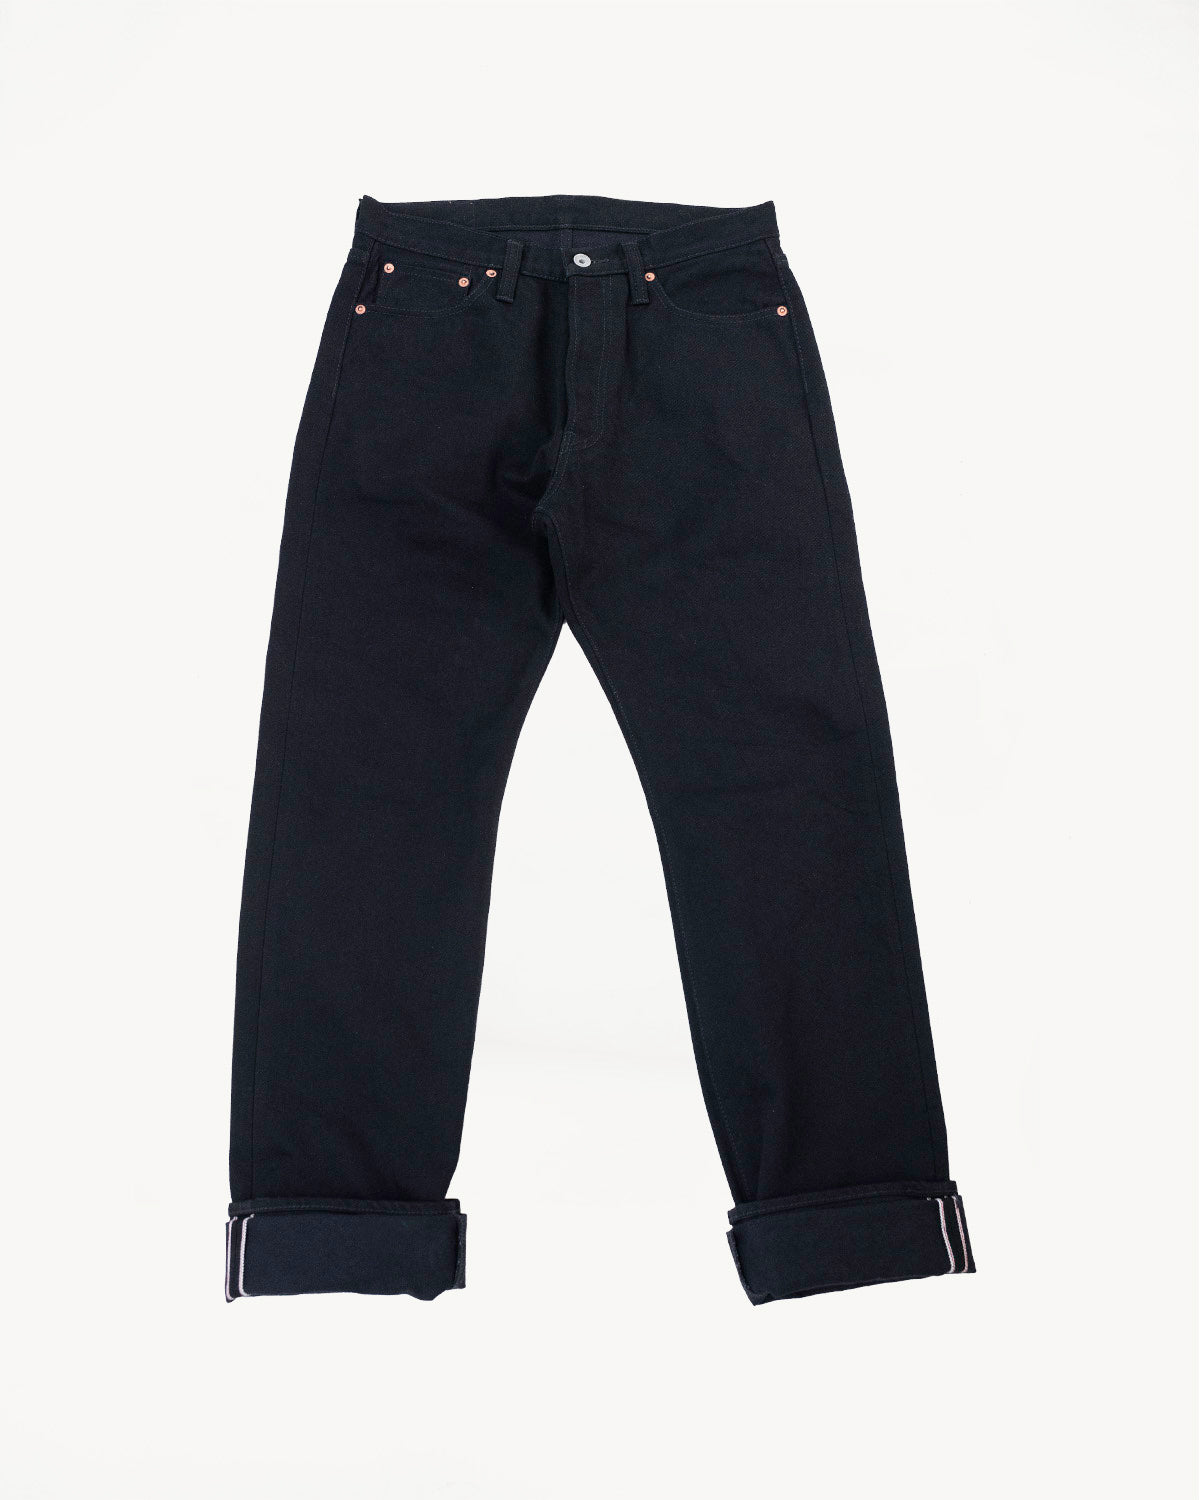 IH-888S-142bb - 14oz Selvedge Denim Medium/High Rise Tapered Jeans - Black/Black